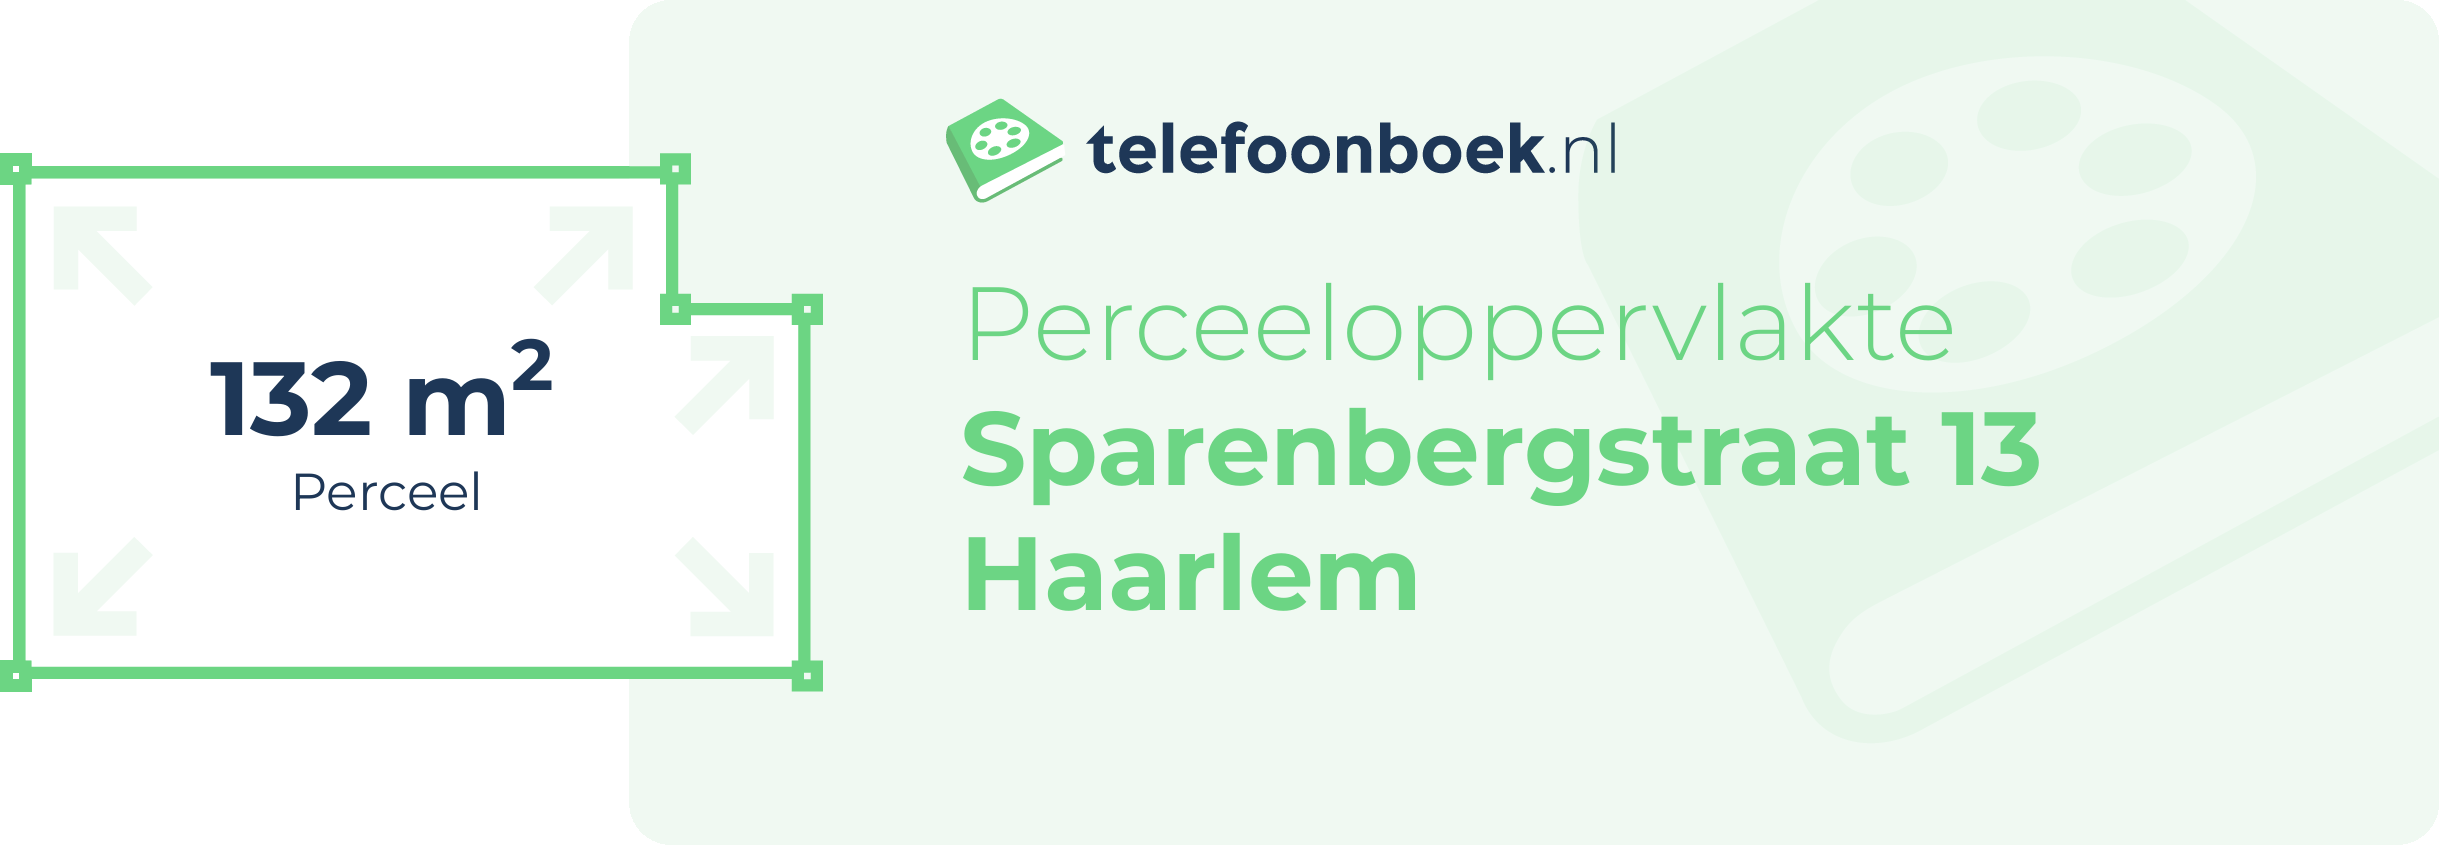 Perceeloppervlakte Sparenbergstraat 13 Haarlem